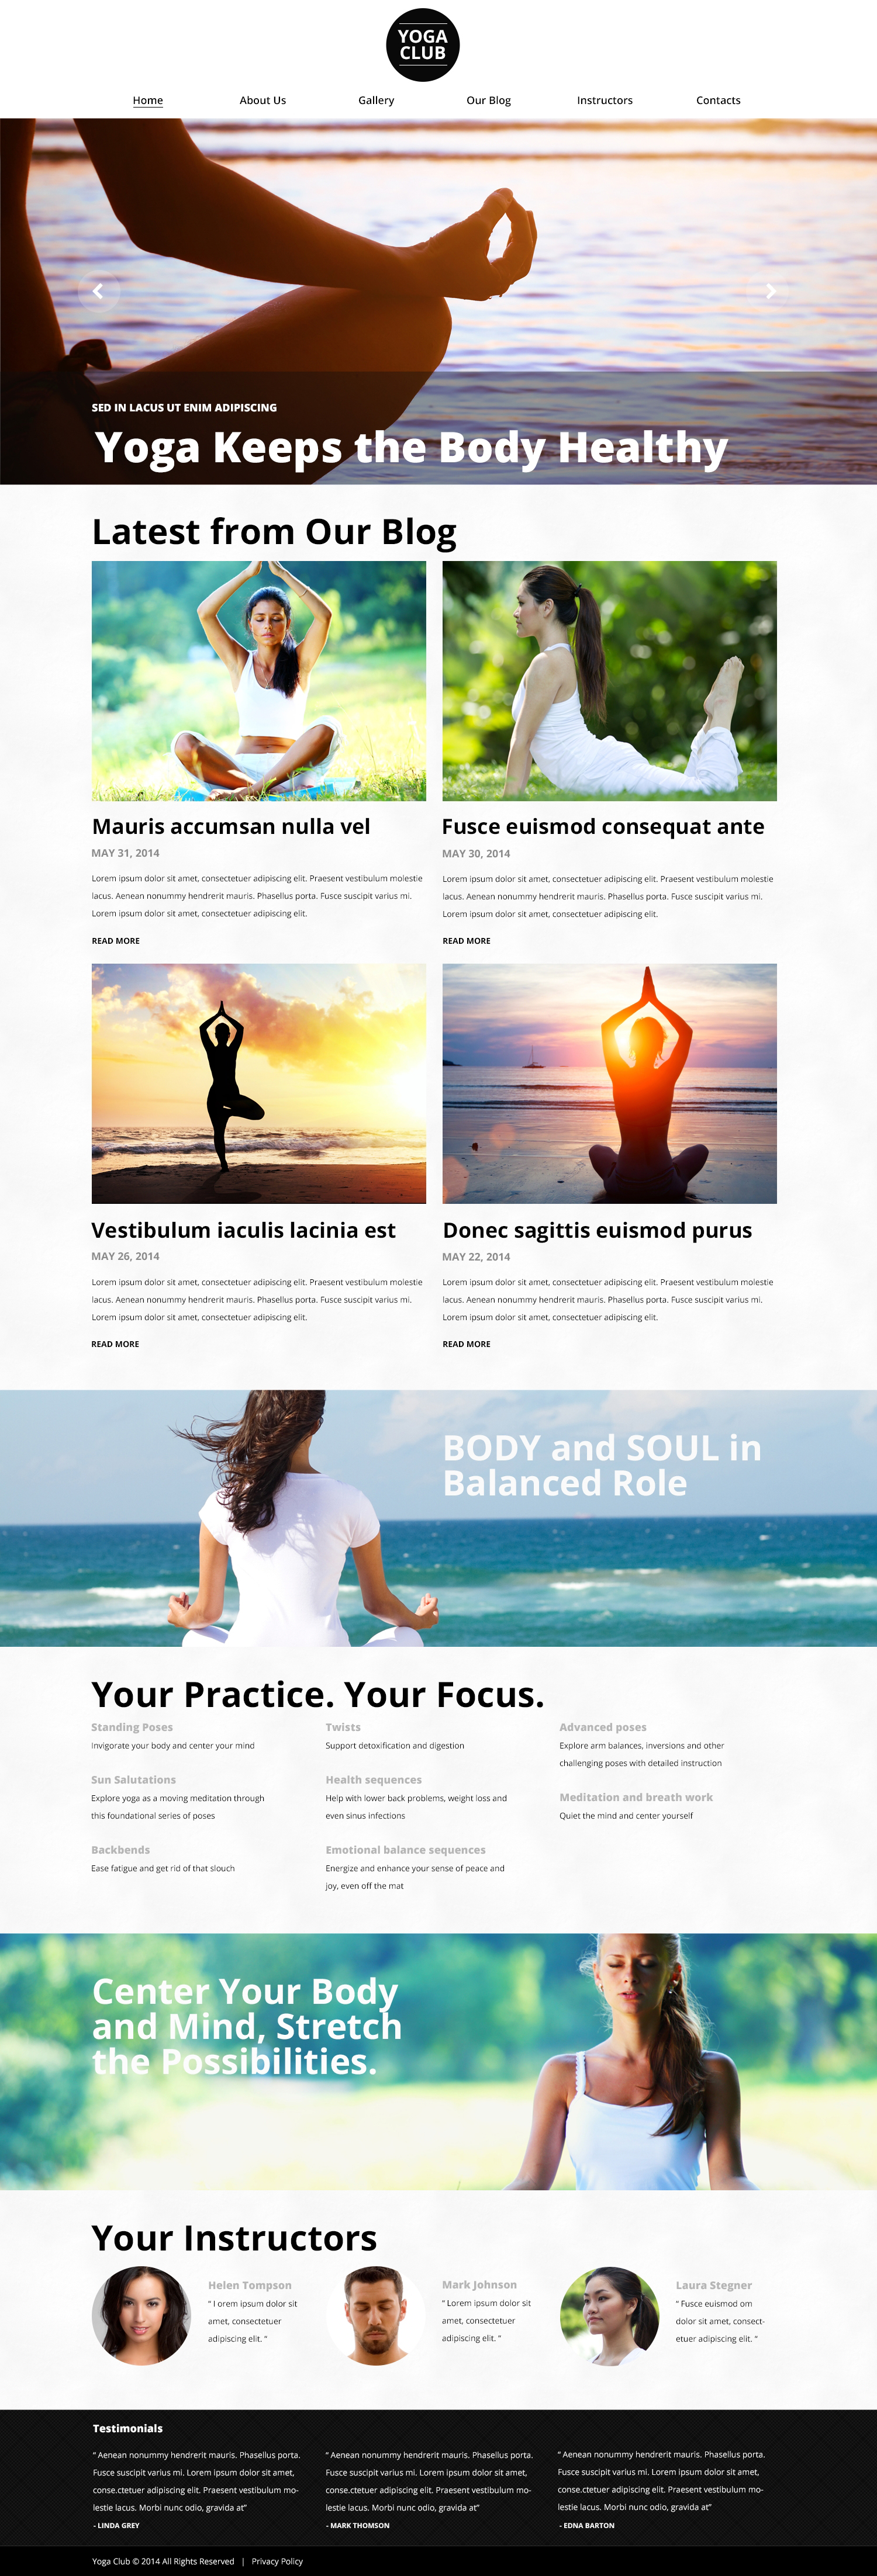 OpenAir Yoga Classes WordPress Theme